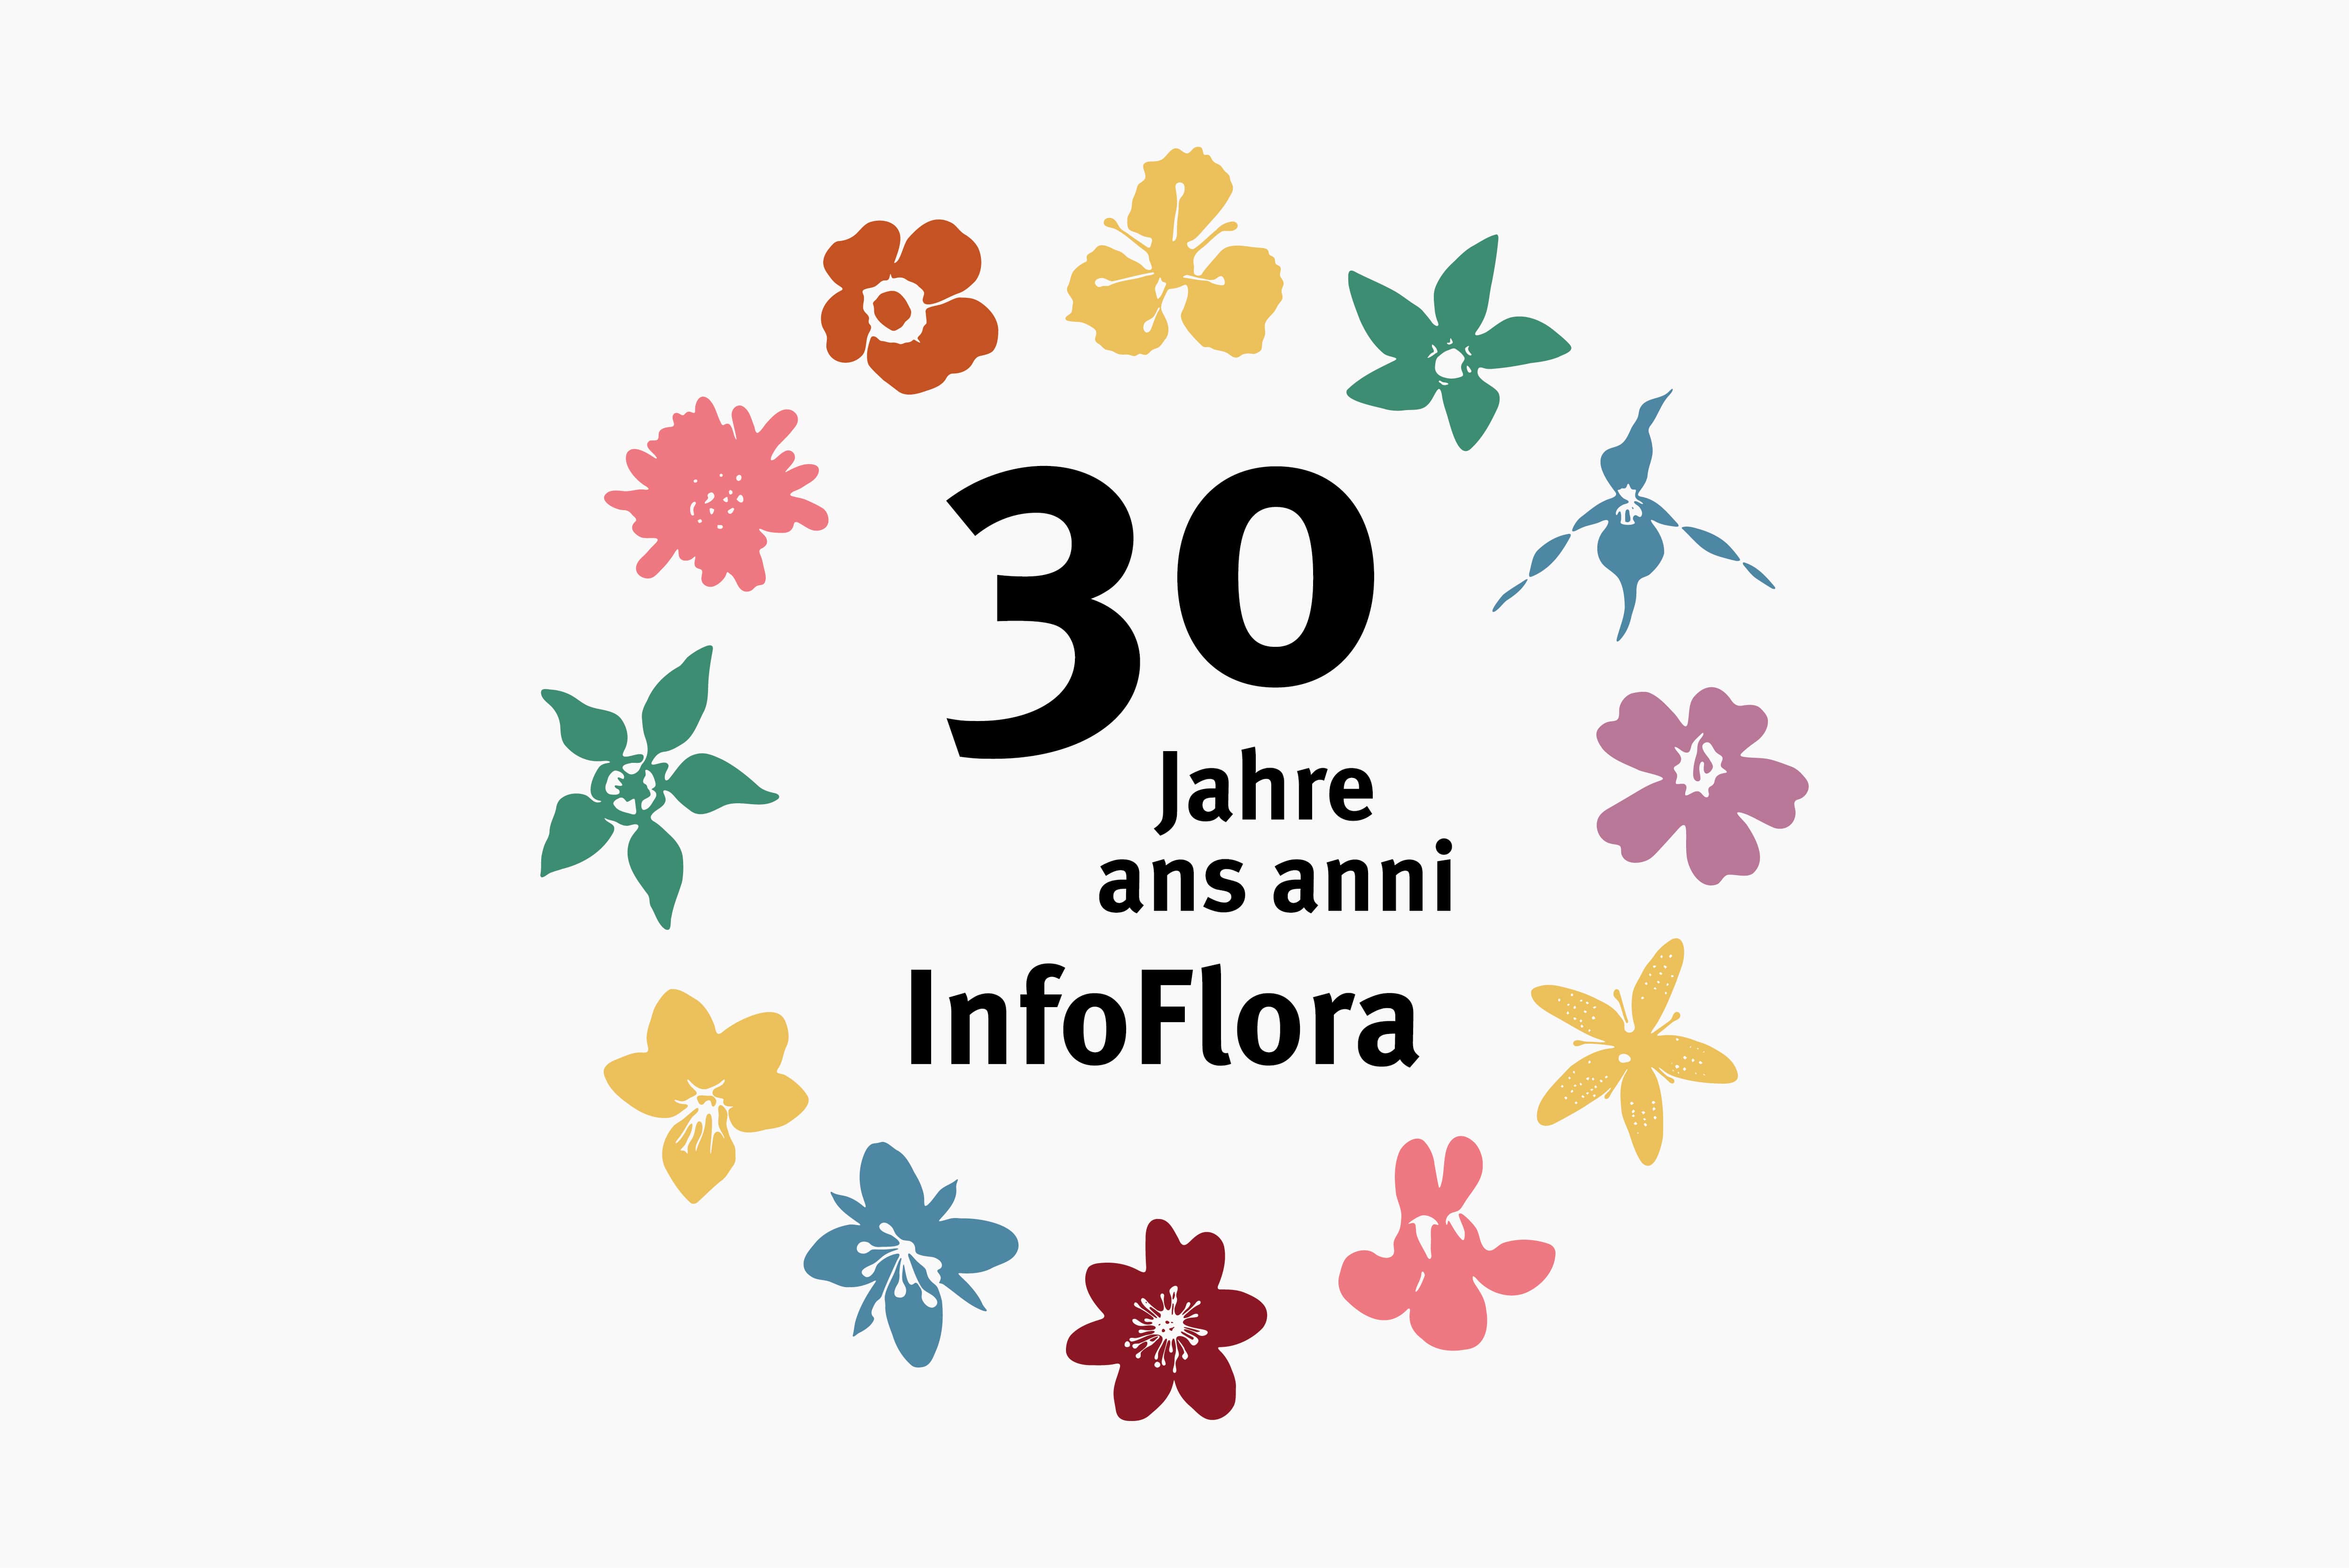 info flora image